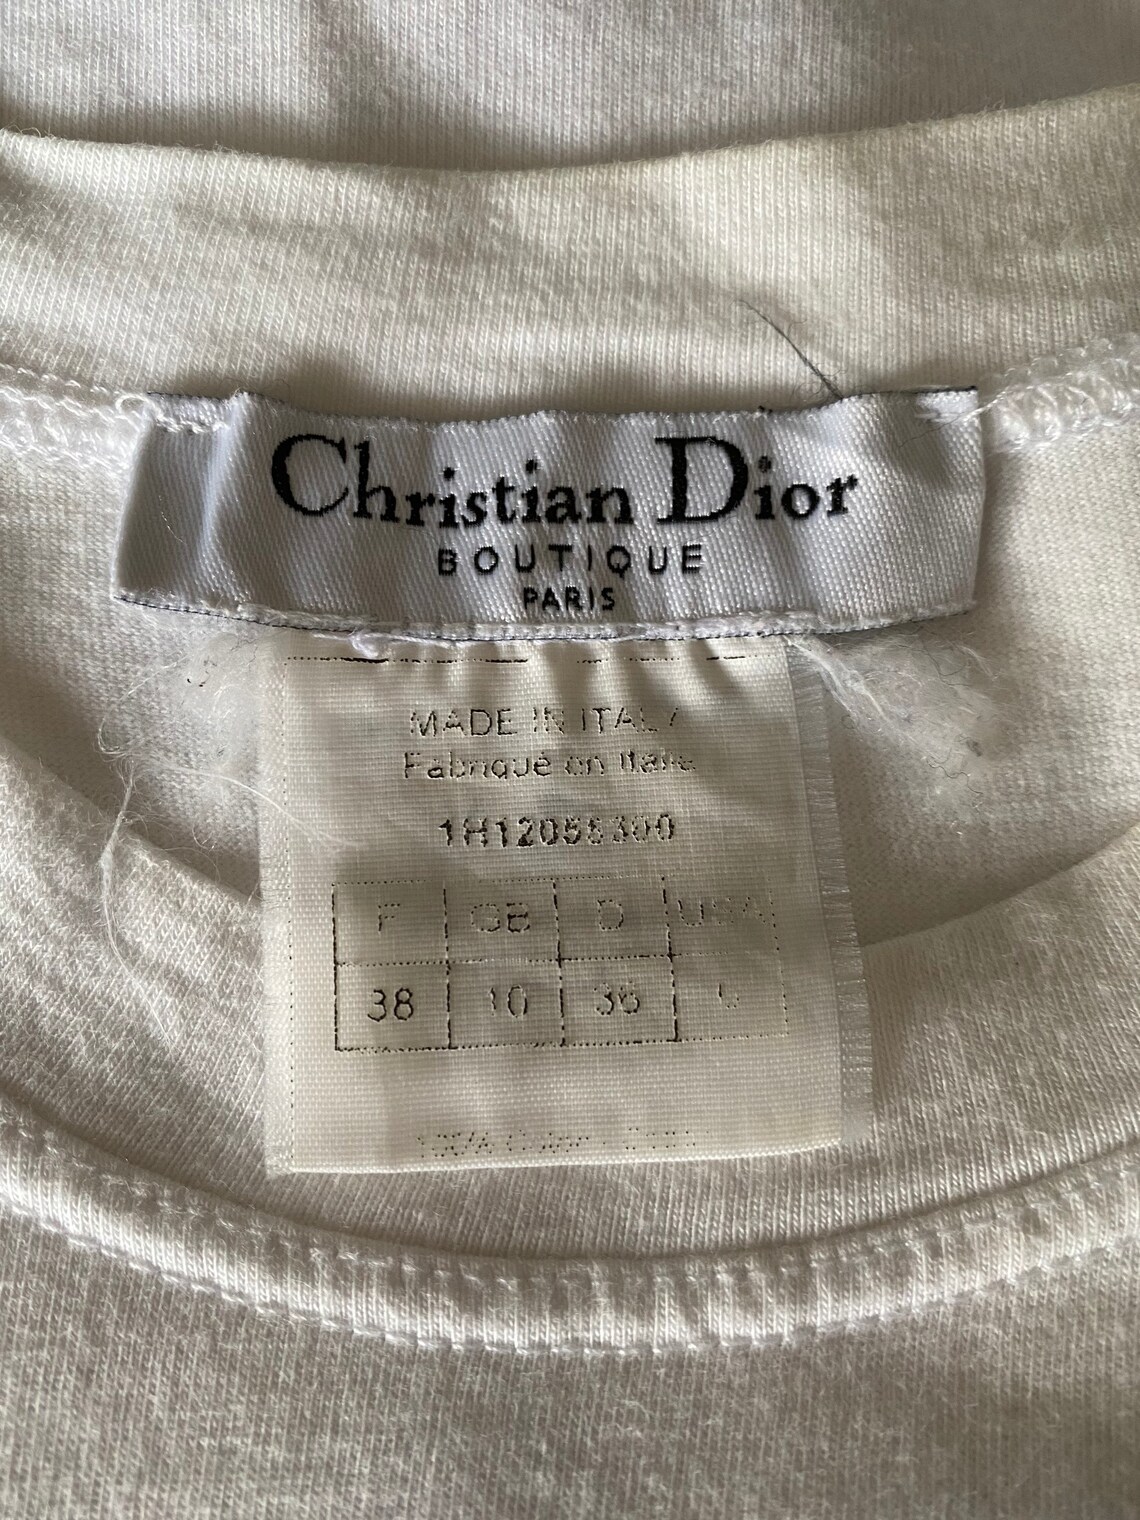 J Adore Dior World Champion 1947 T Shirt | Etsy